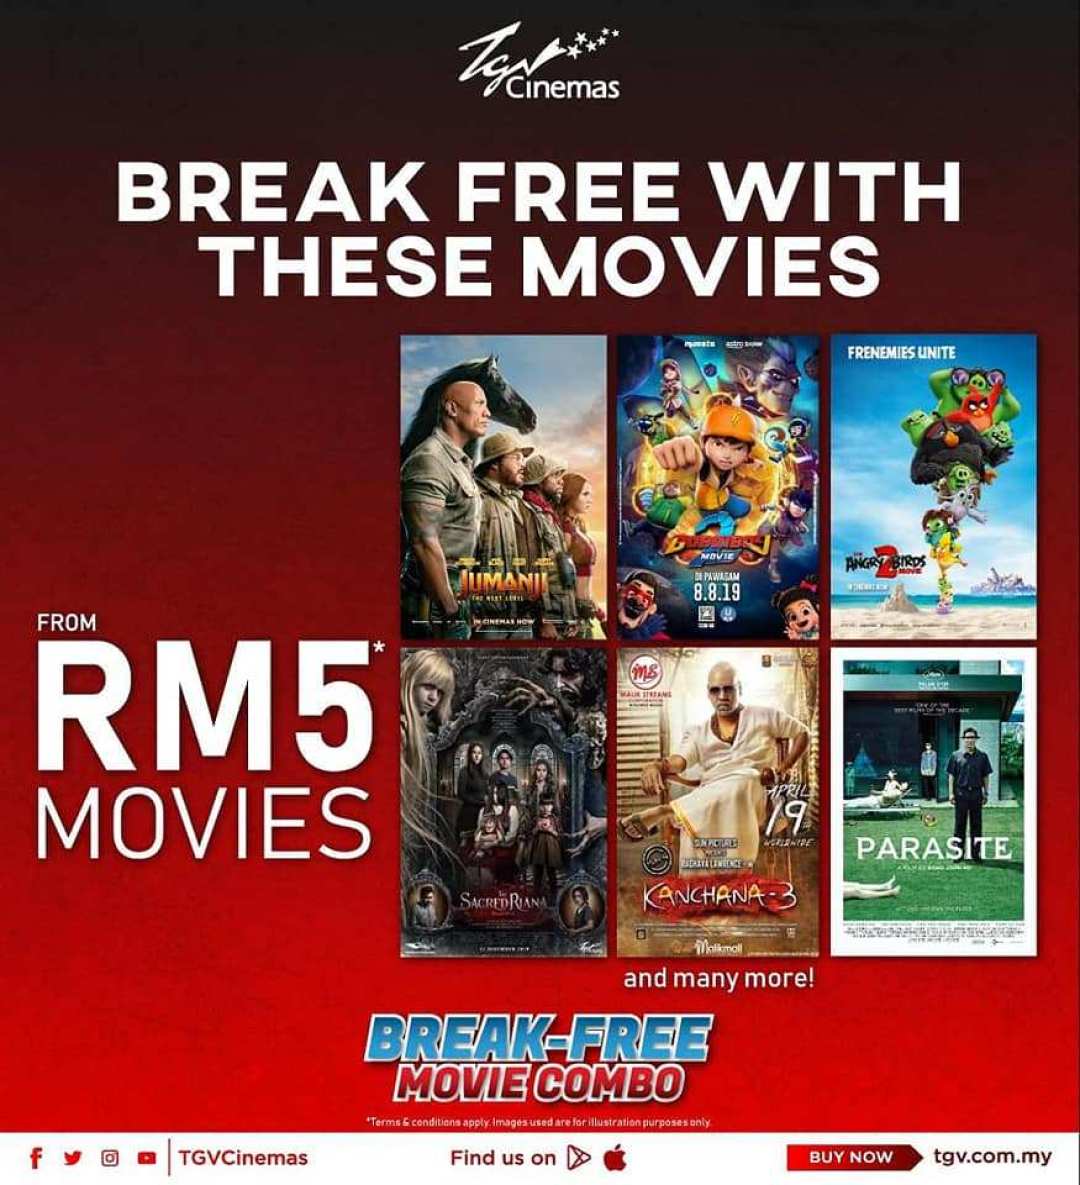 TGV Cinemas offers movie reruns from RM 5.00 onwards